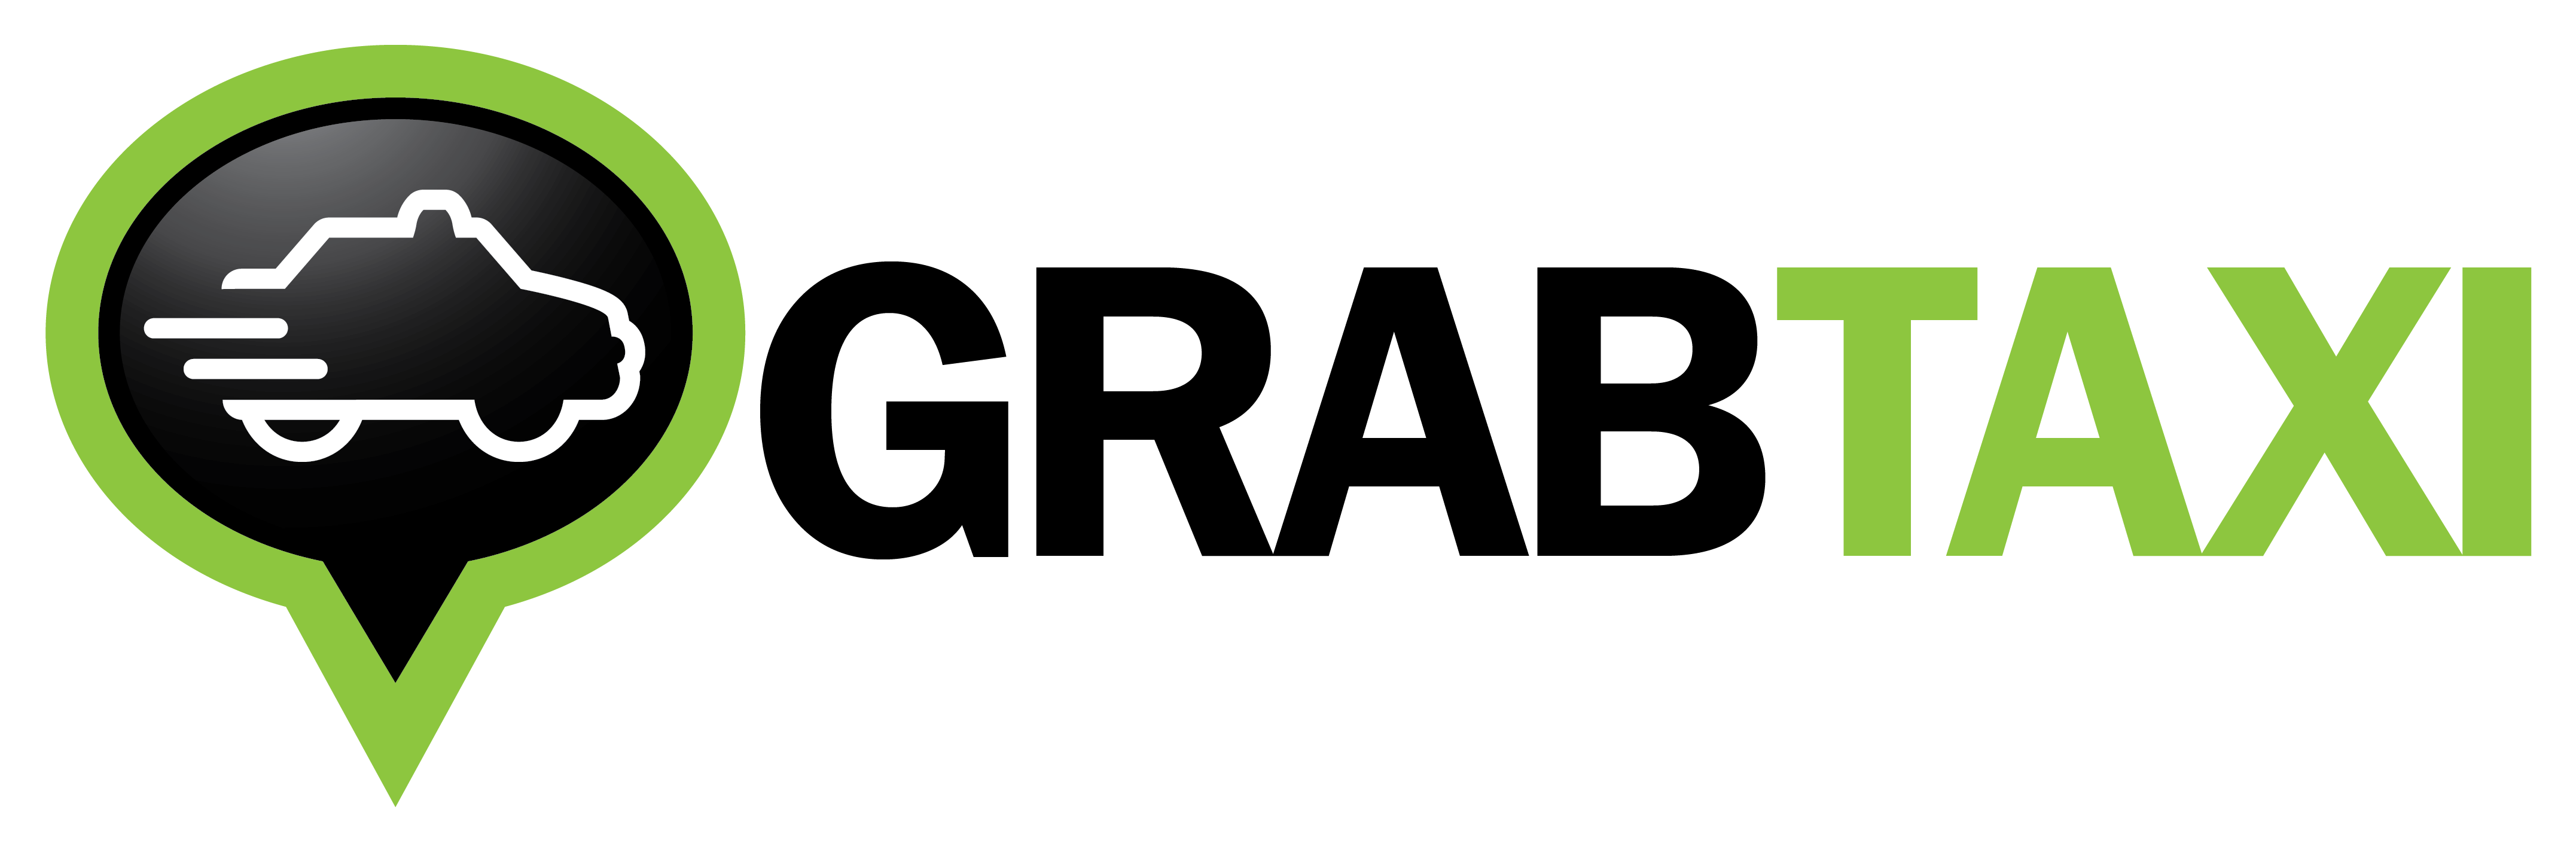 Grab Singapore Logo - Grab and NuTonomy test self-drive in Singapore | Global Fleet